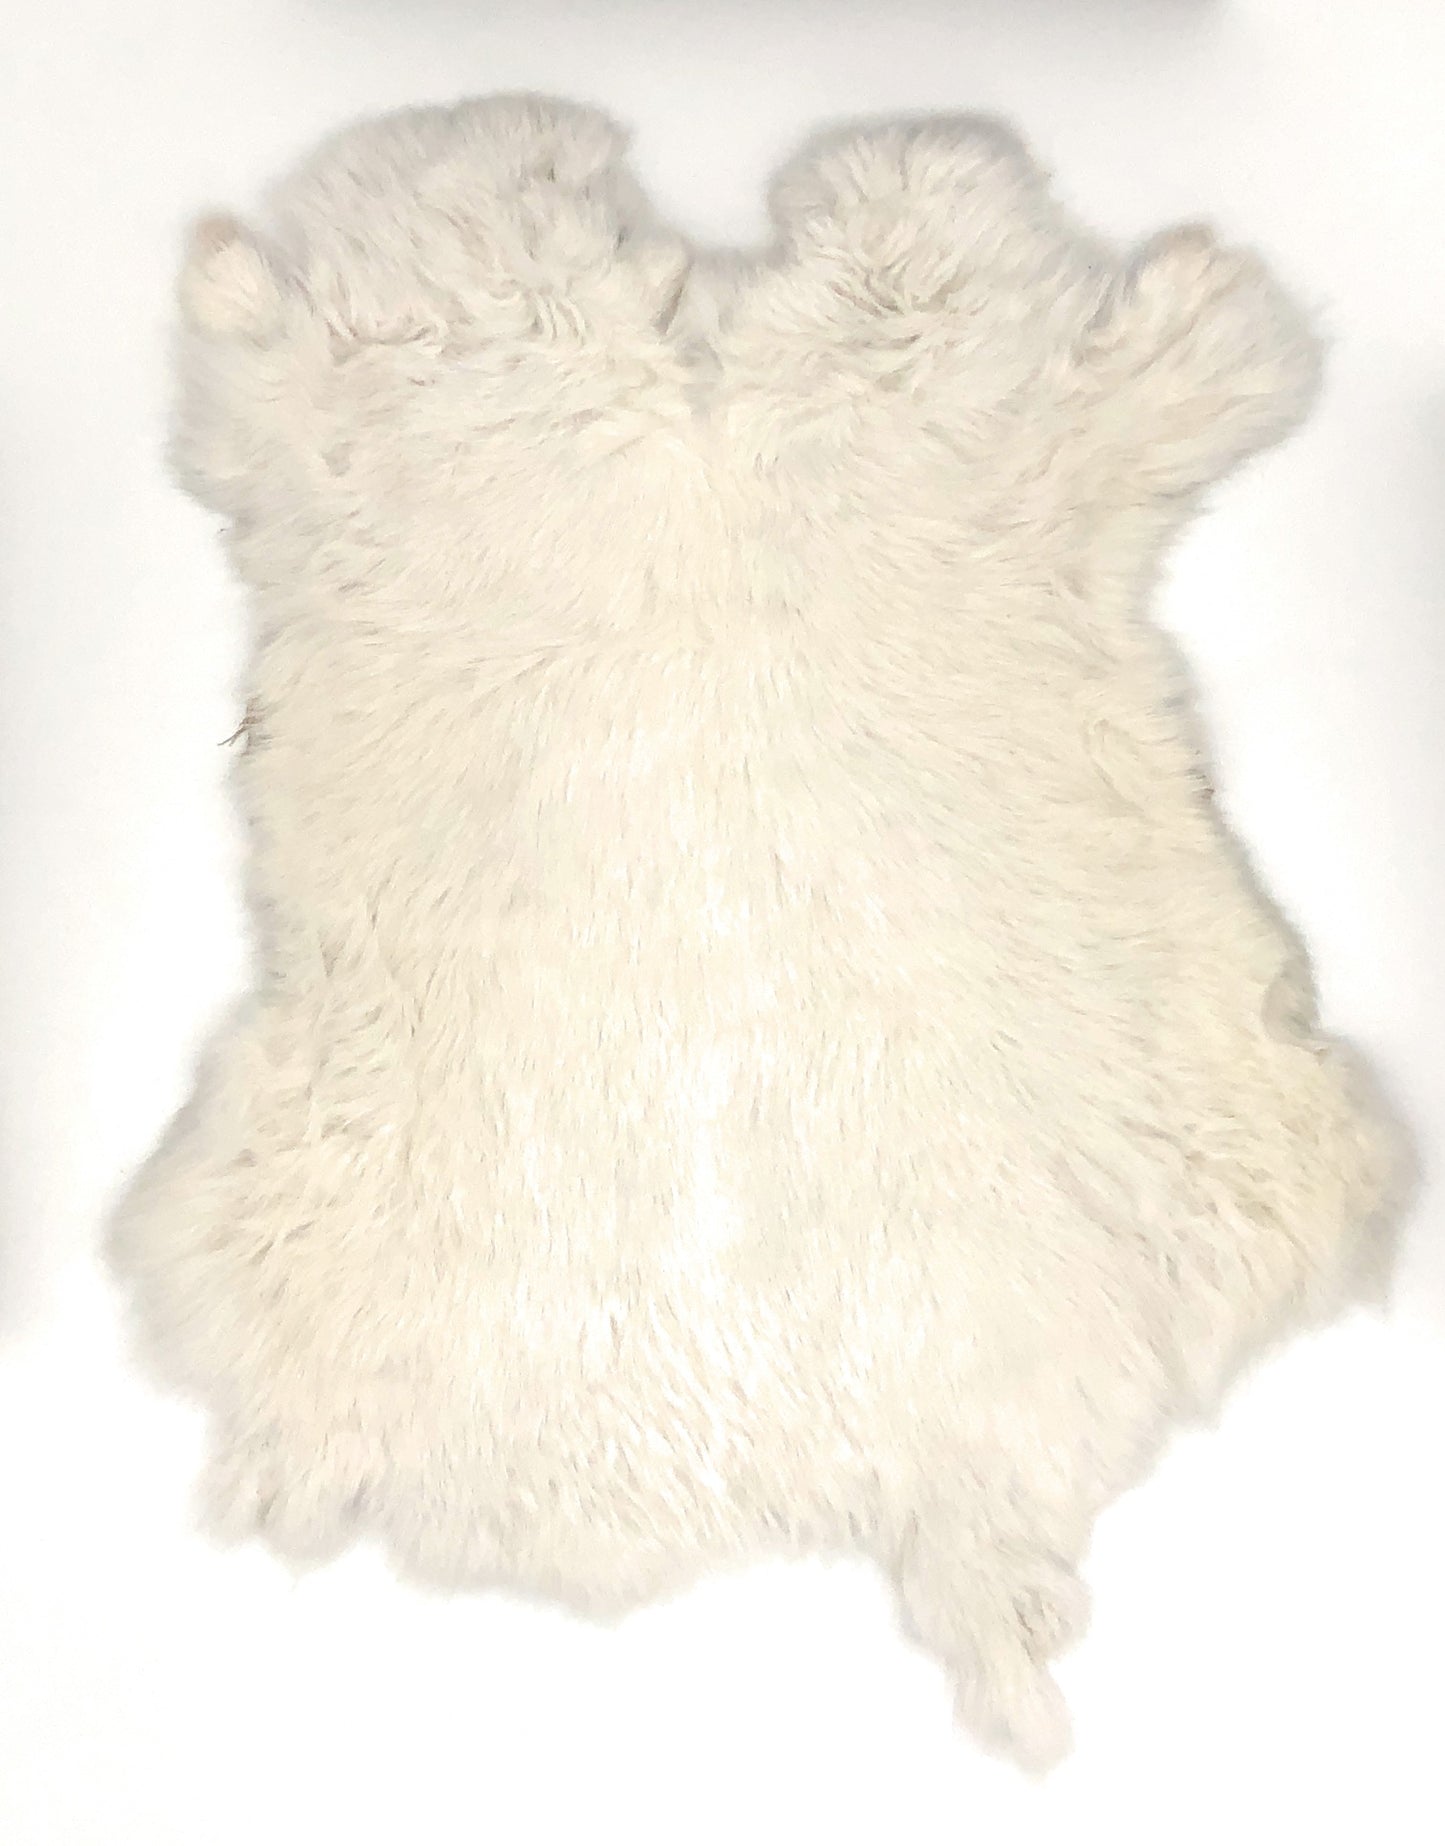 Assorted Bulk Grade Natural Rabbit Pelt with Fur (10 by 14) Rabbit Skins  Fur Hide Leather for Decoration & Crafts Cat/Dog Toys Soft Professionally